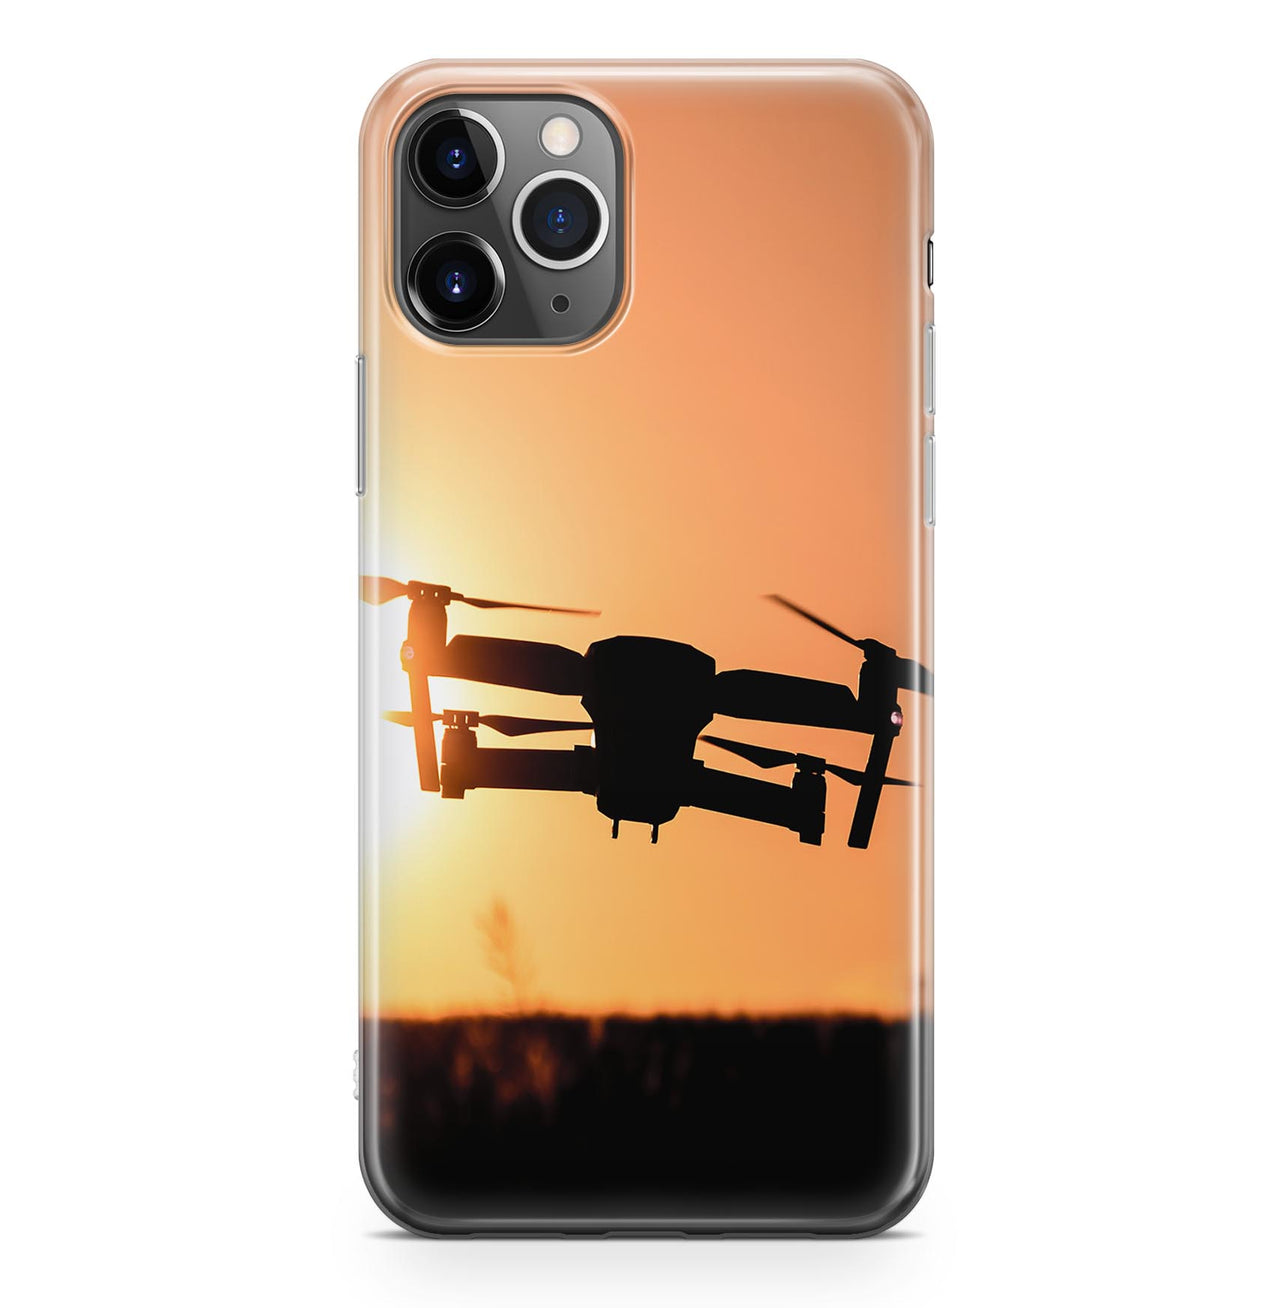 Amazing Drone in Sunset Designed iPhone Cases